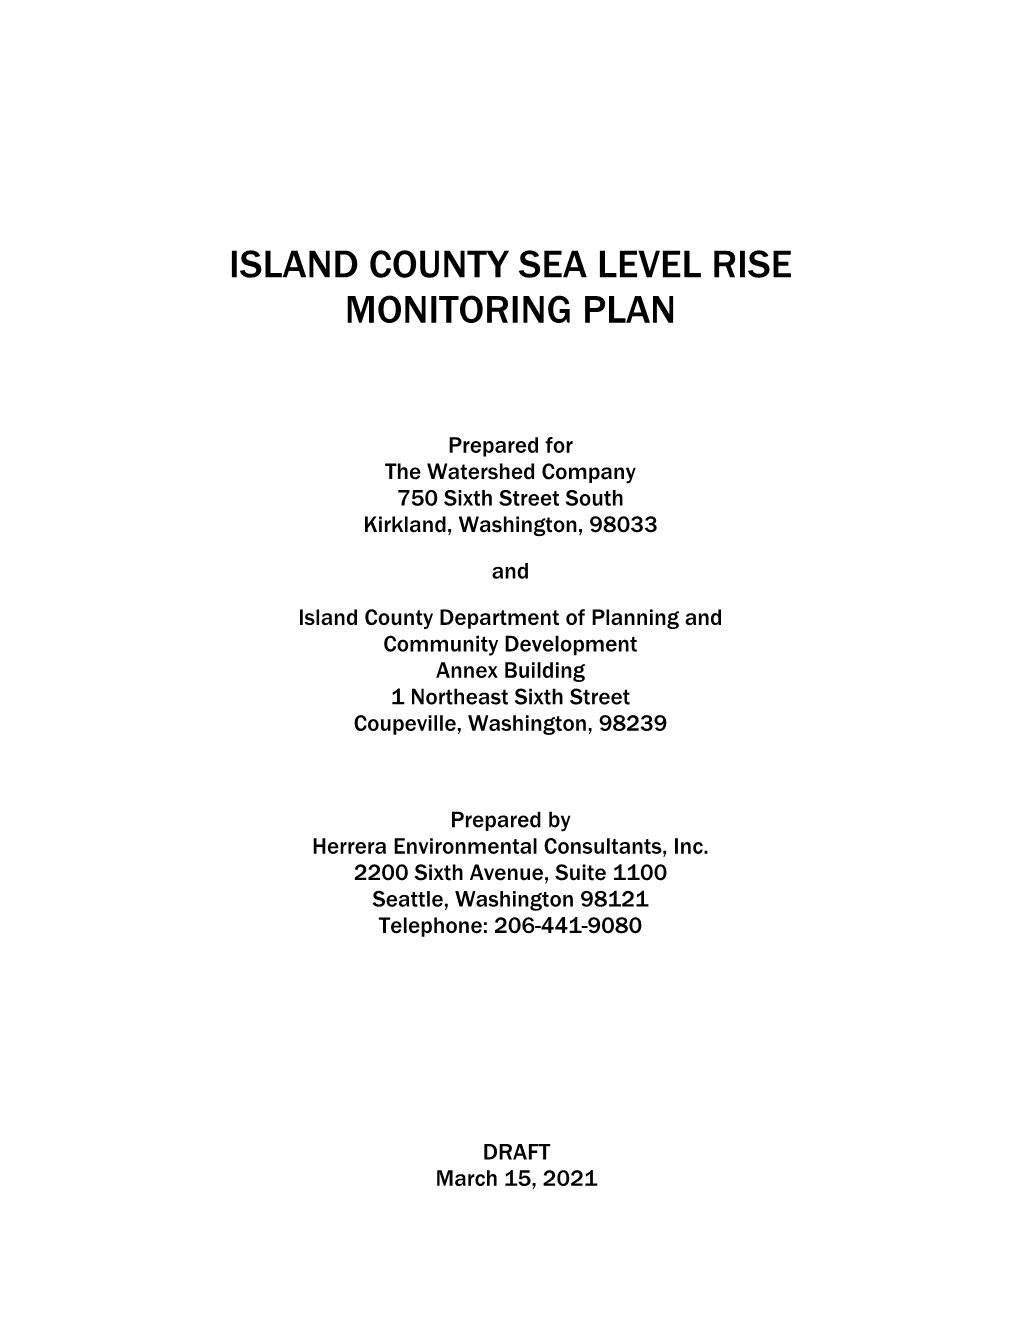 Island County Sea Level Rise Monitoring Plan